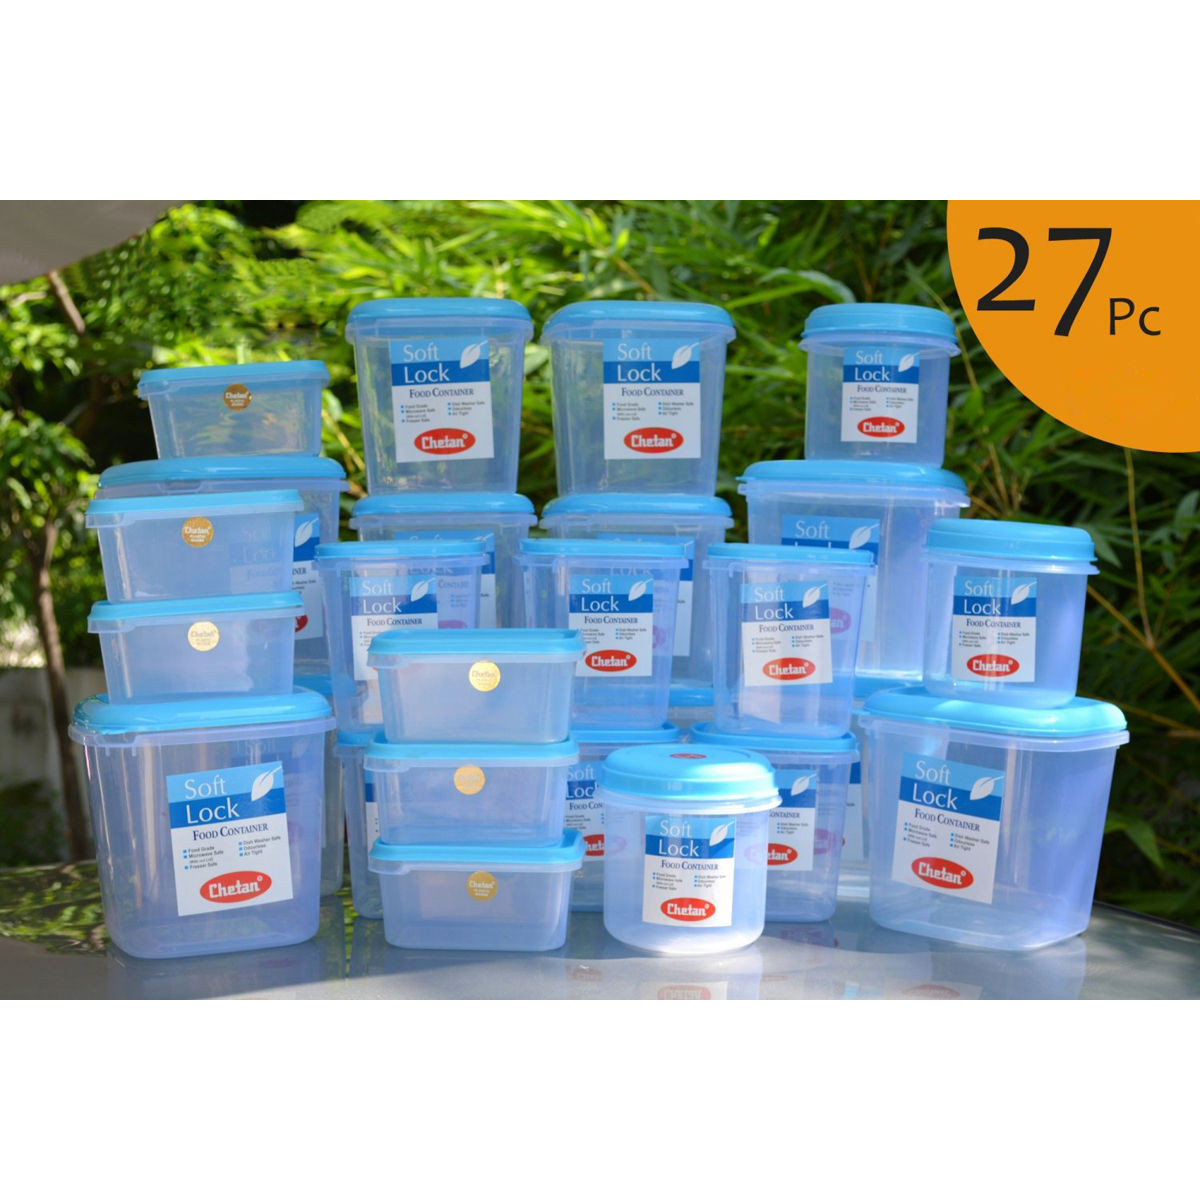 Storage Containers For Kitchen
 Buy Chetan Set of 27 Pcs Plastic Airtight Kitchen Storage